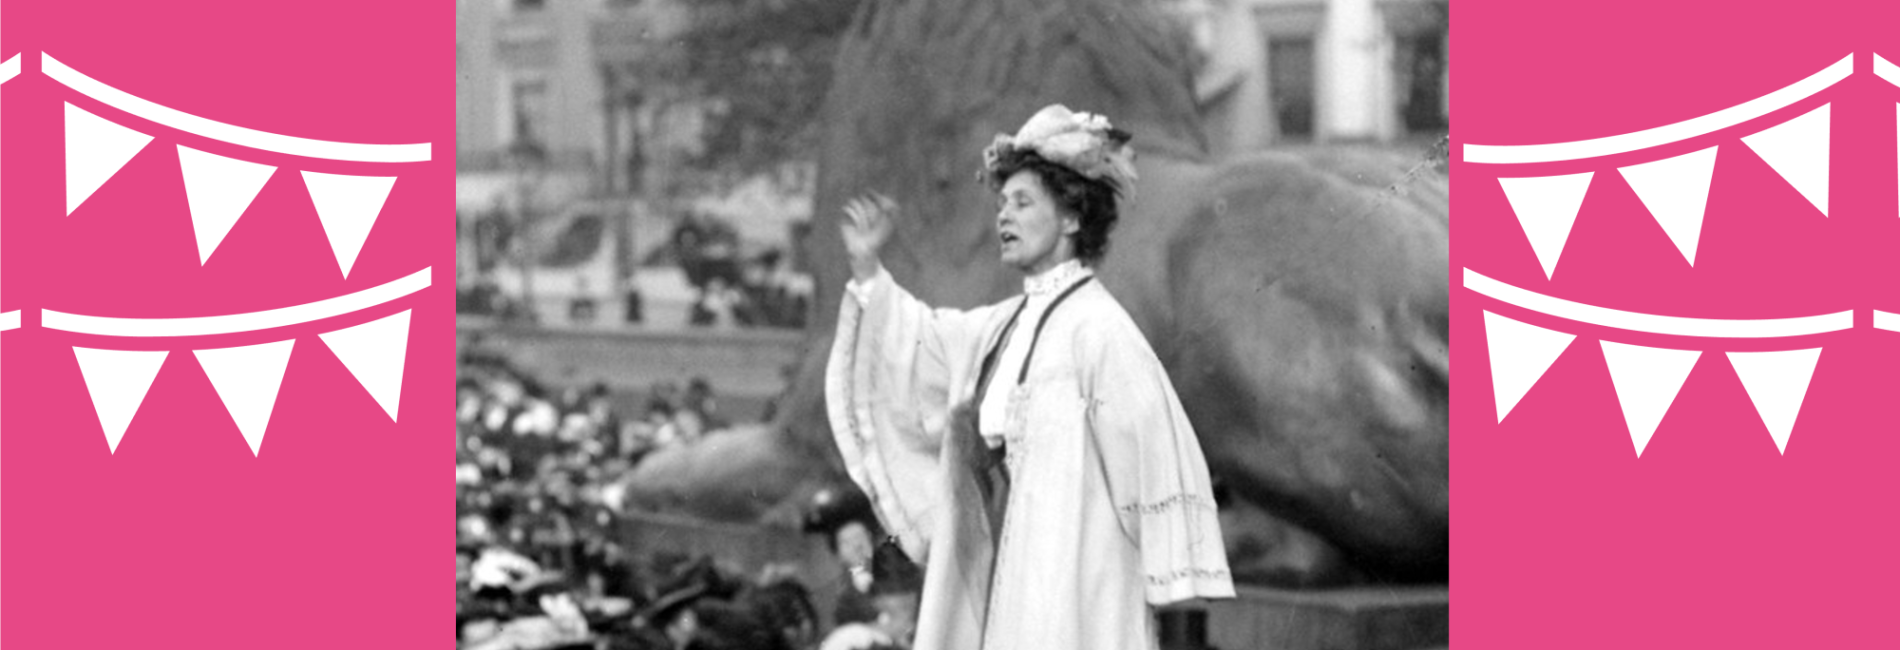 Inspiring People - Emmeline Pankhurst